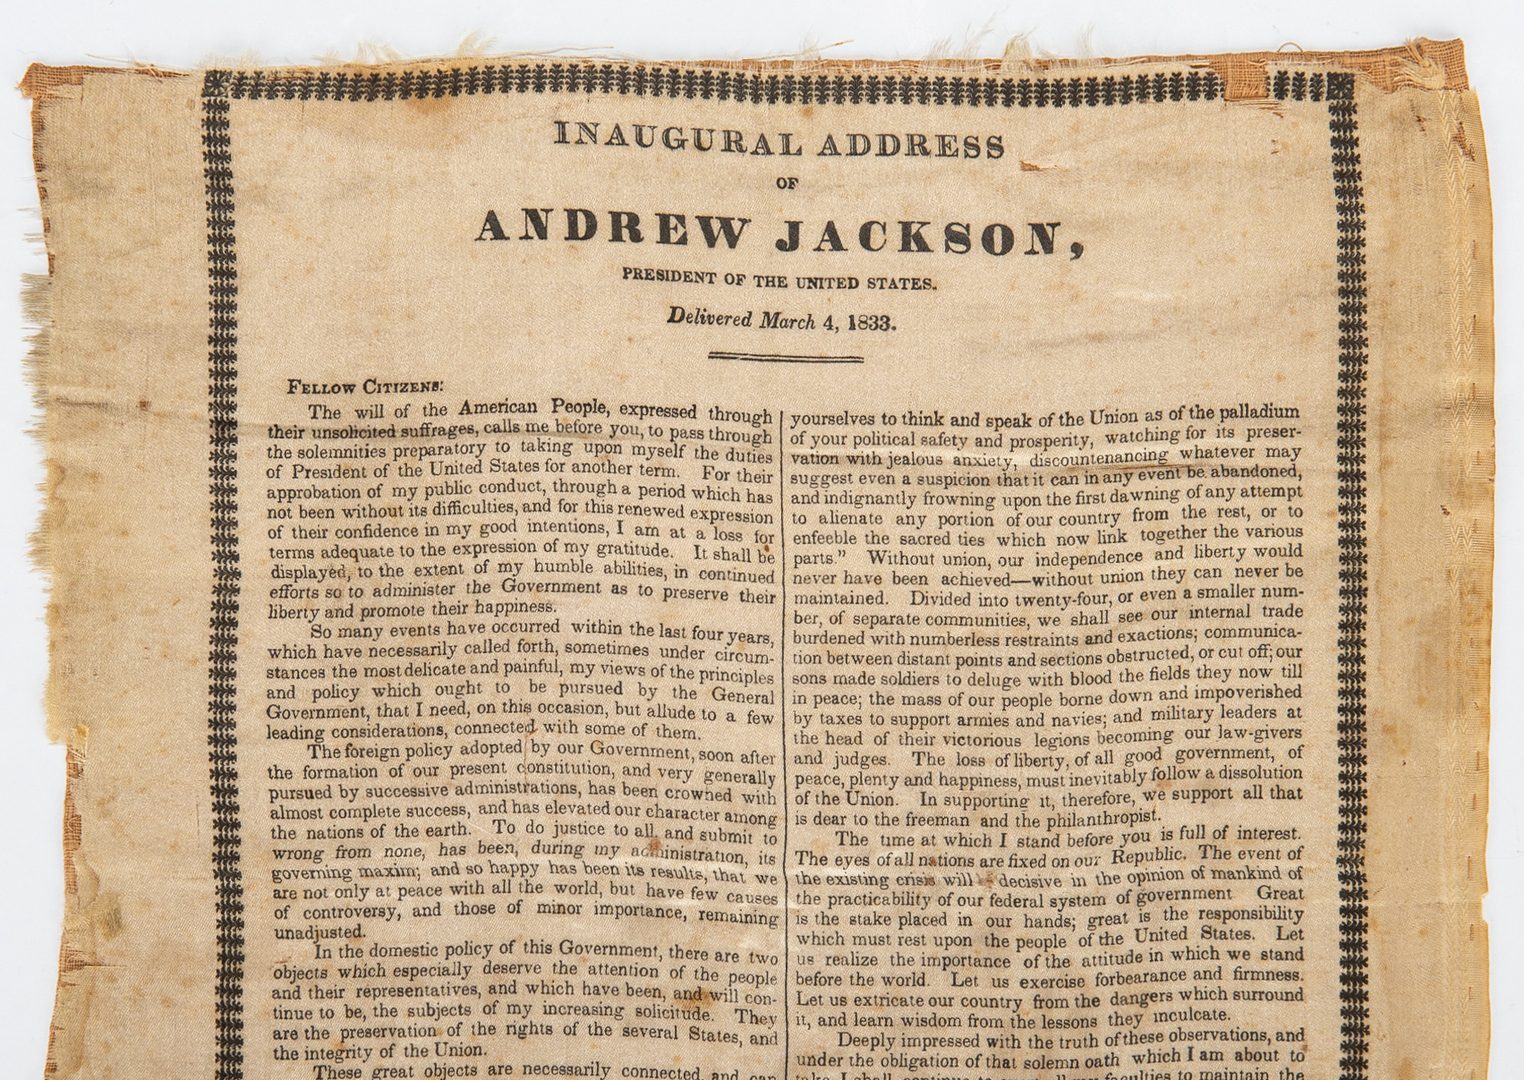 Lot 758: 2 Jackson items, incl. Printed Silk Broadside, 2nd Inauguration Speech